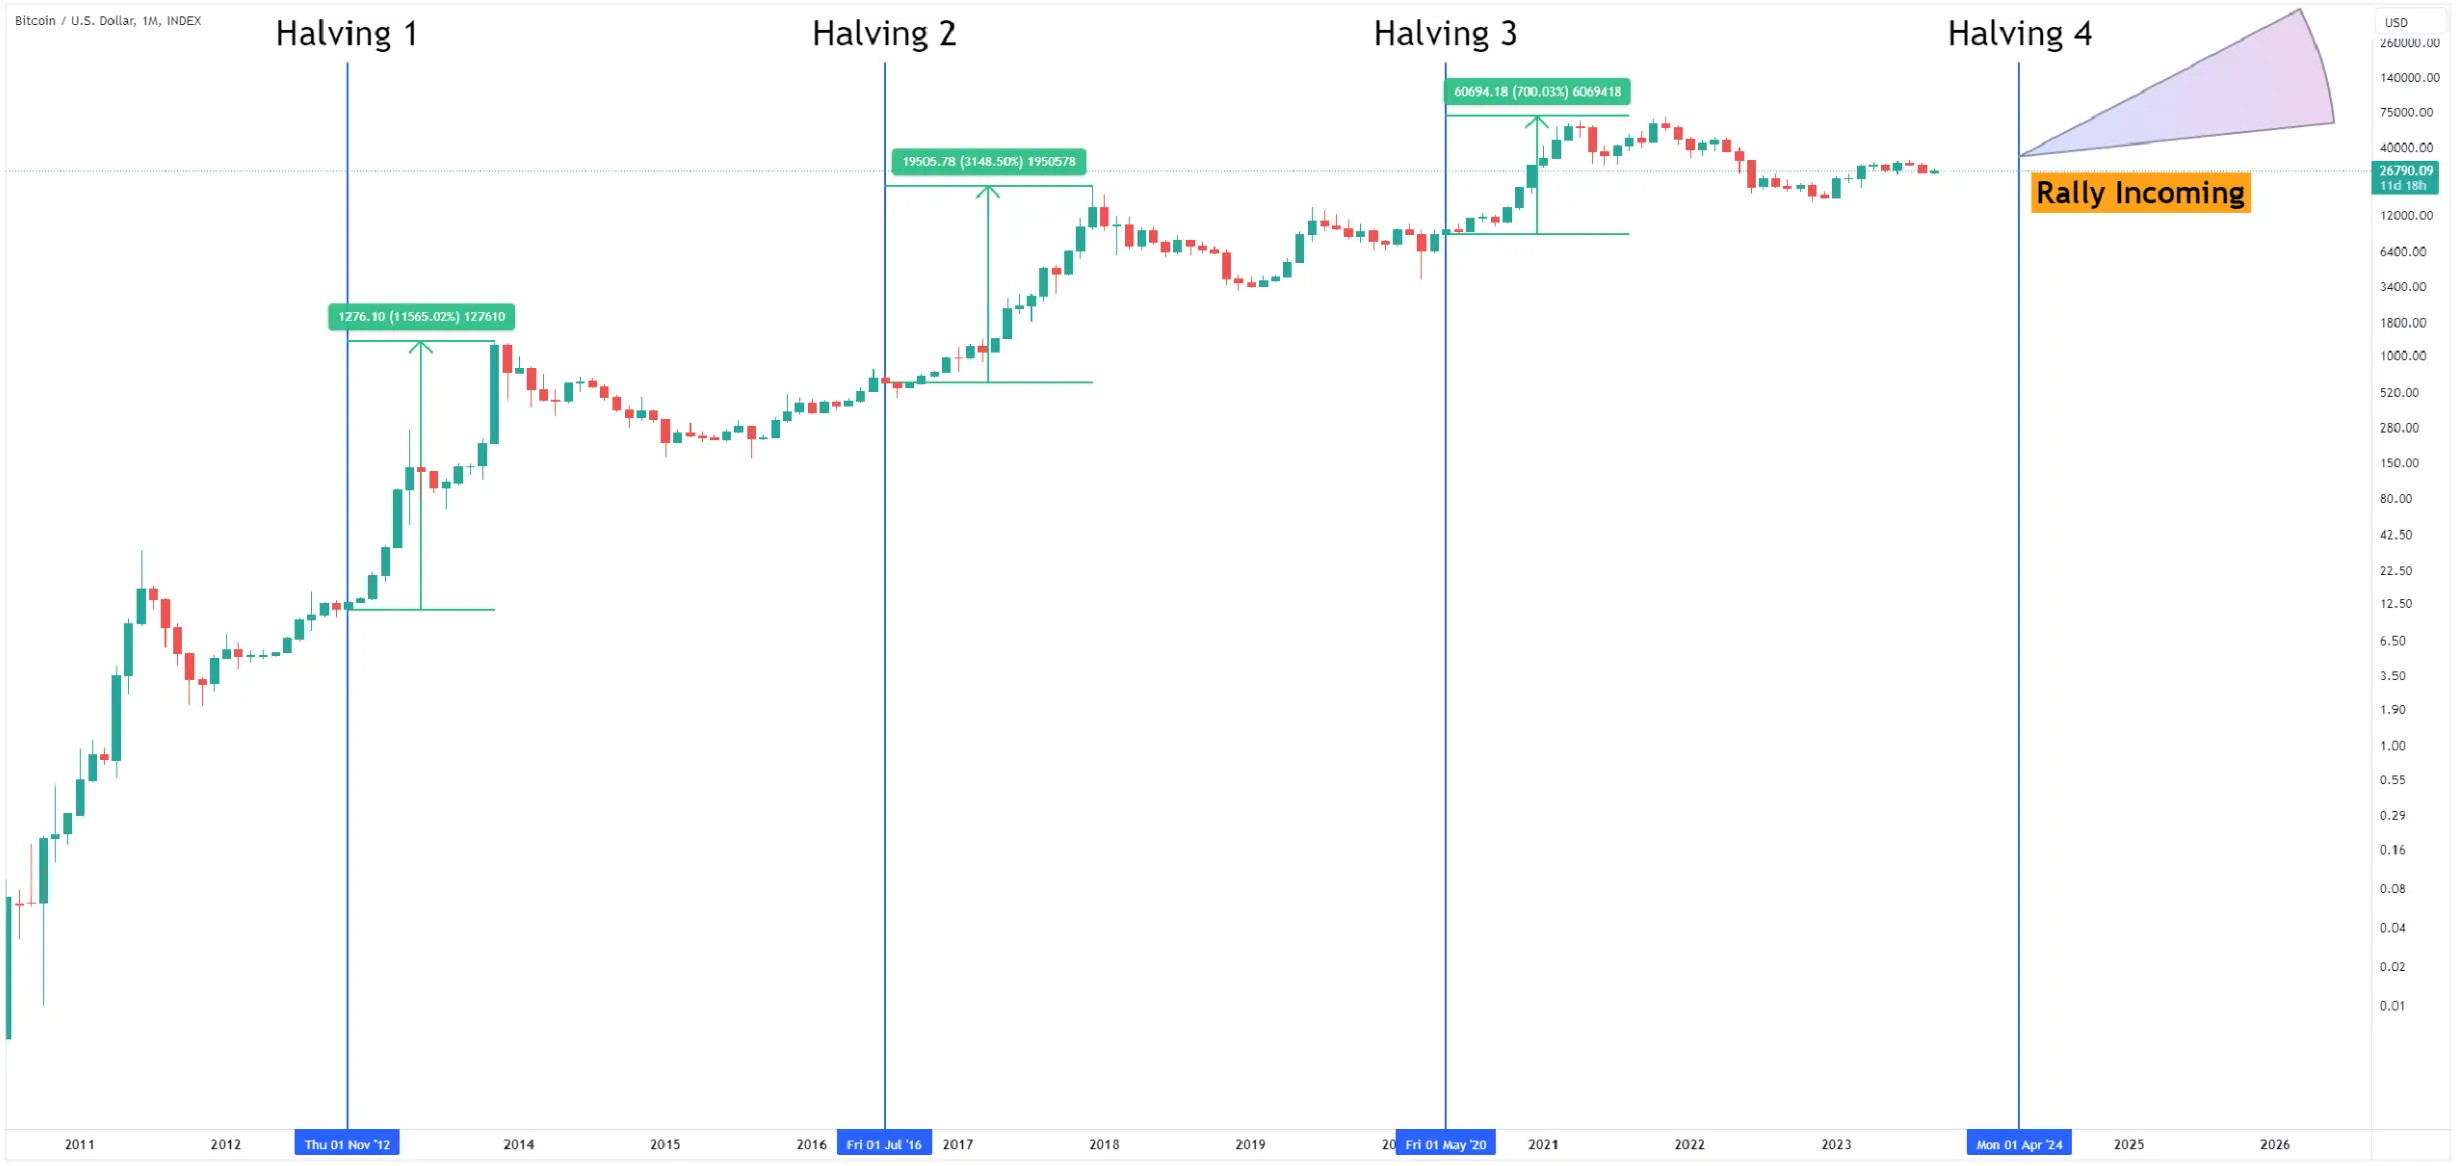 Bitcoin bull market 4 year cycle halving